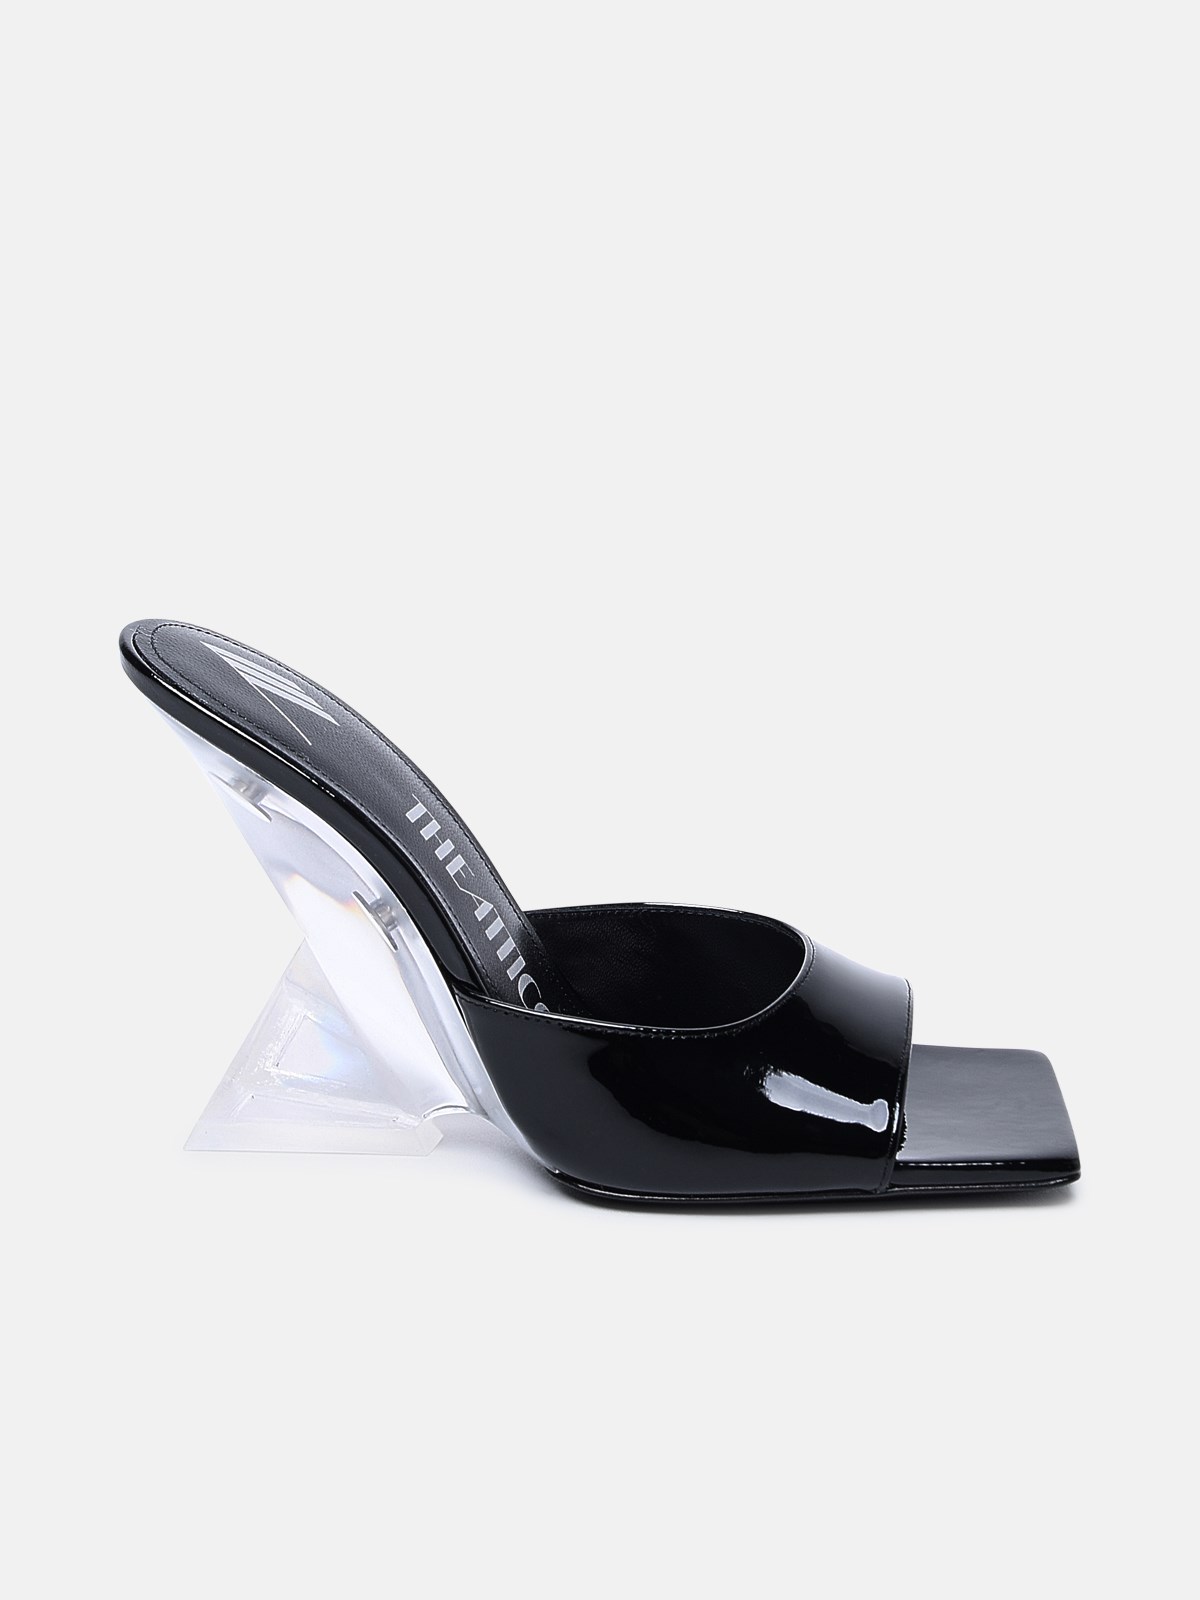 Attico Black Patent Leather Slippers